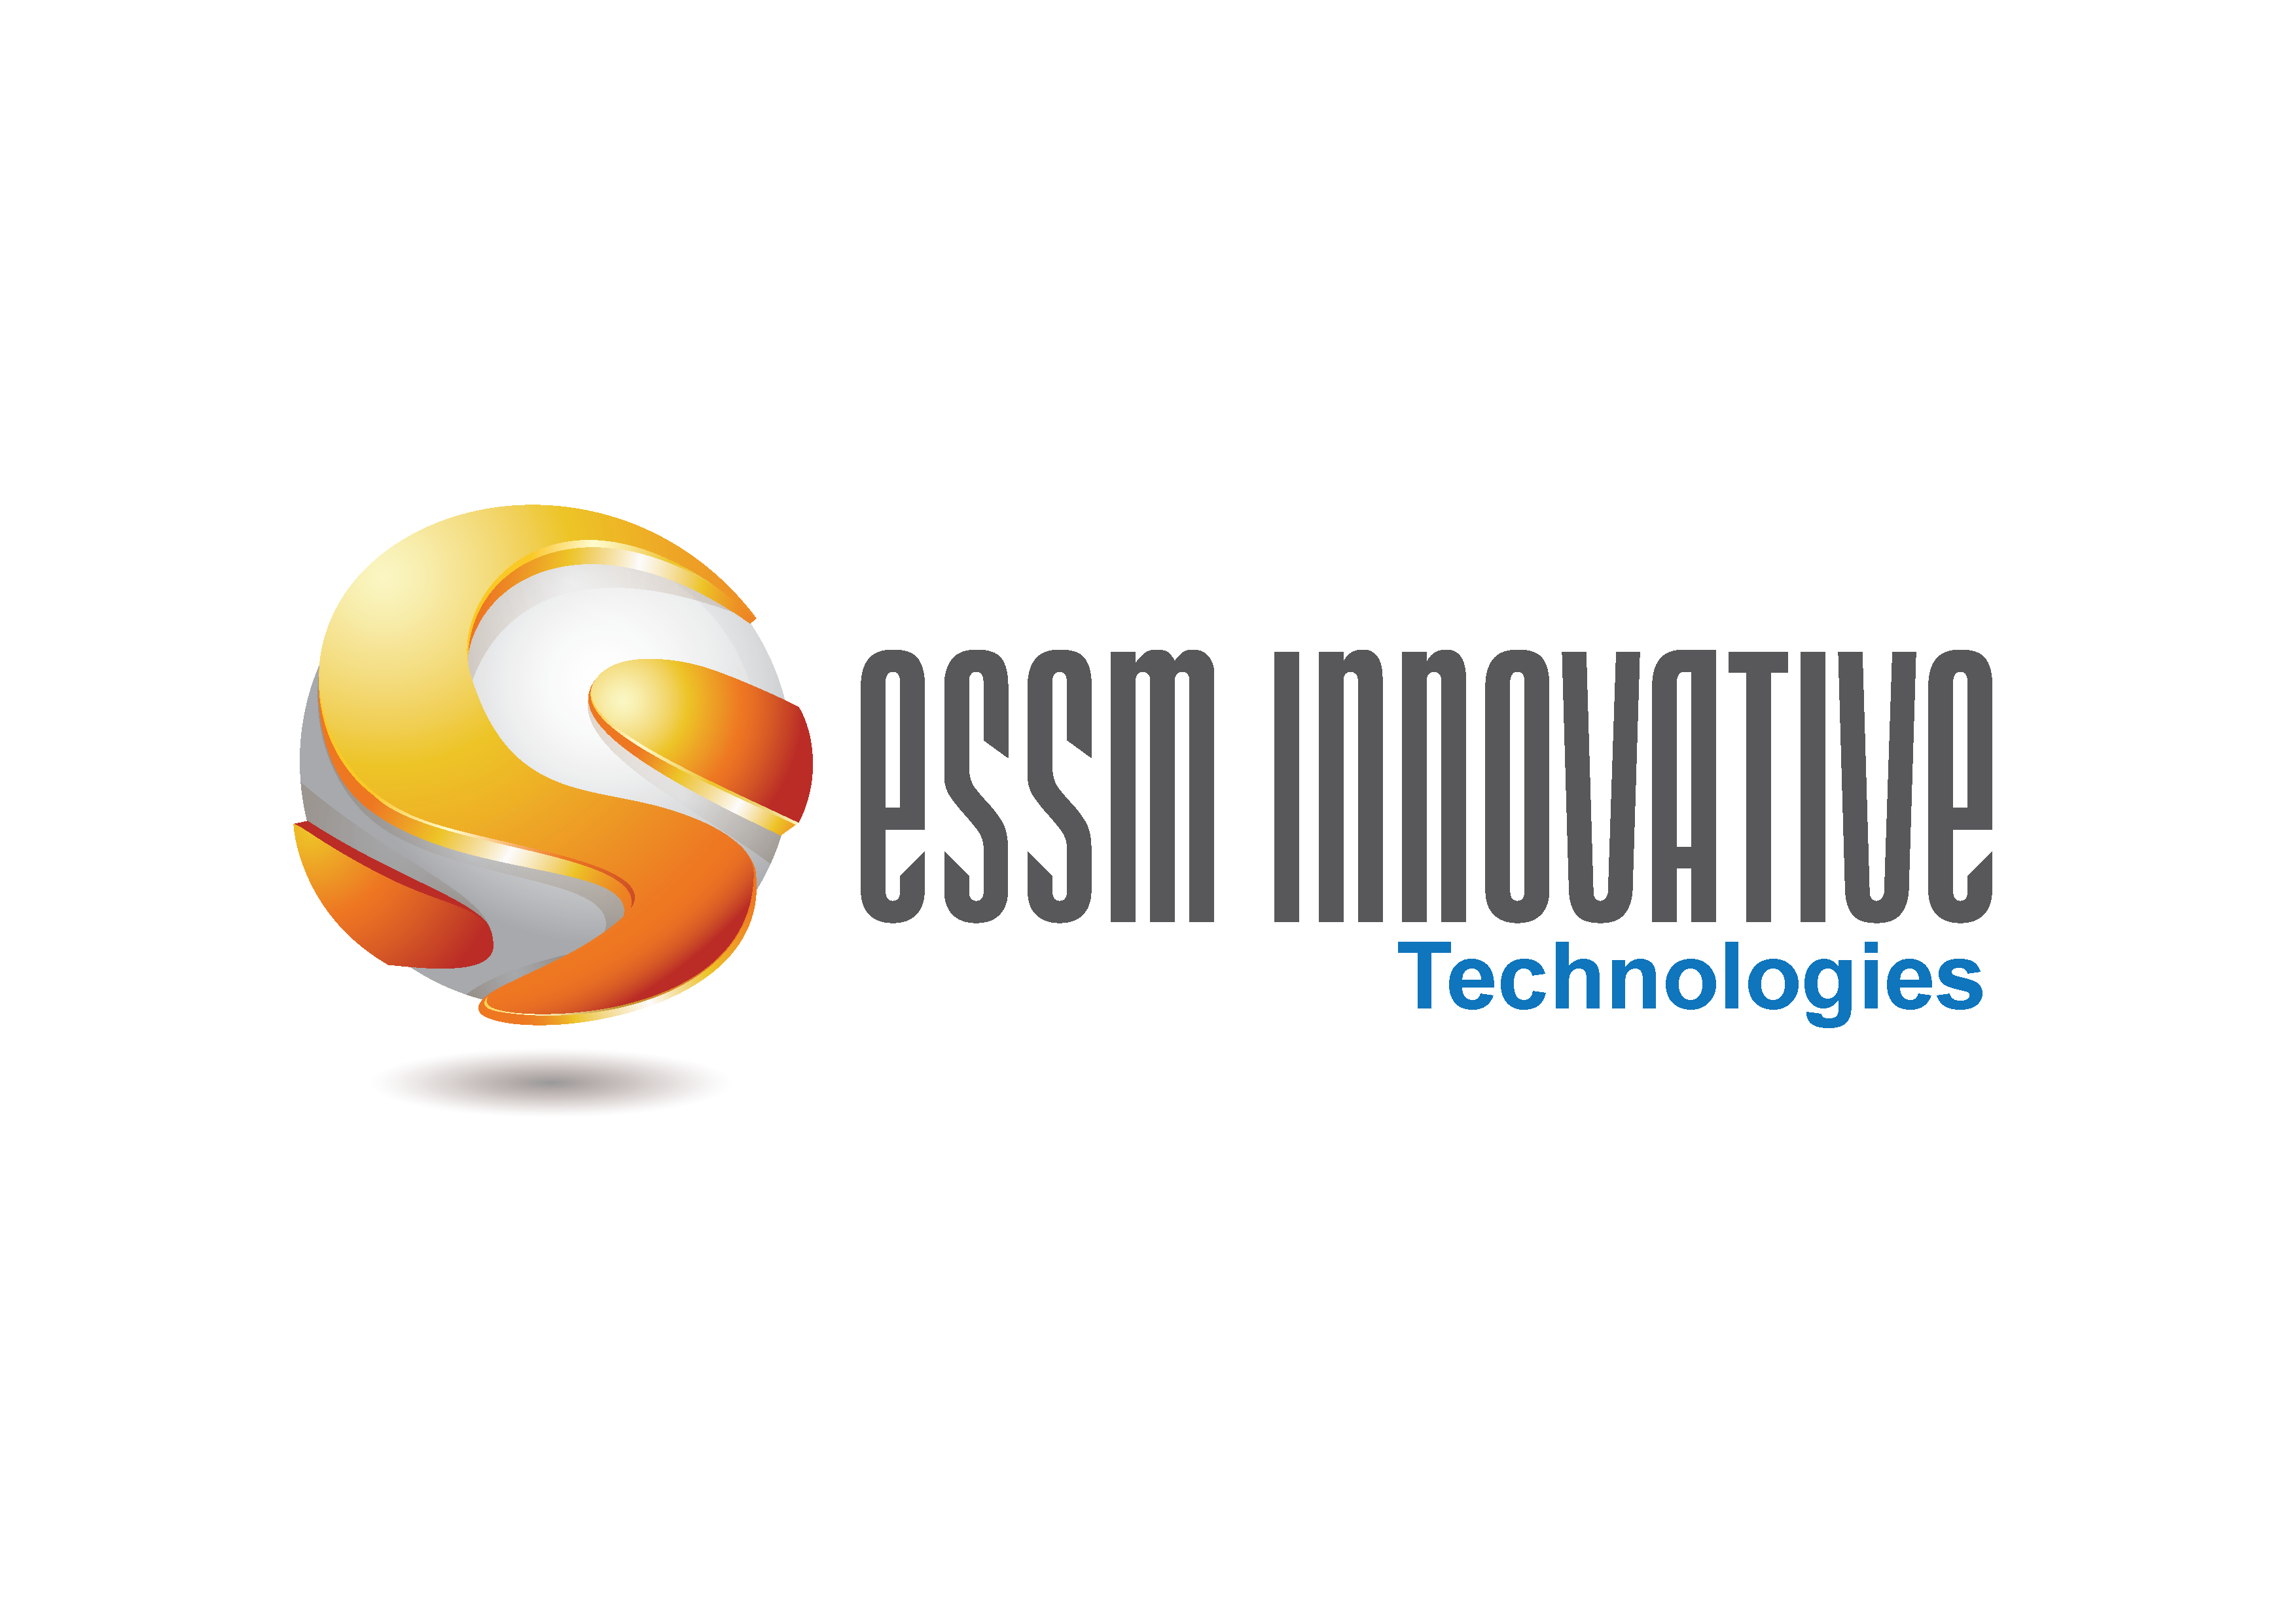 ESSM Innovative Technologies